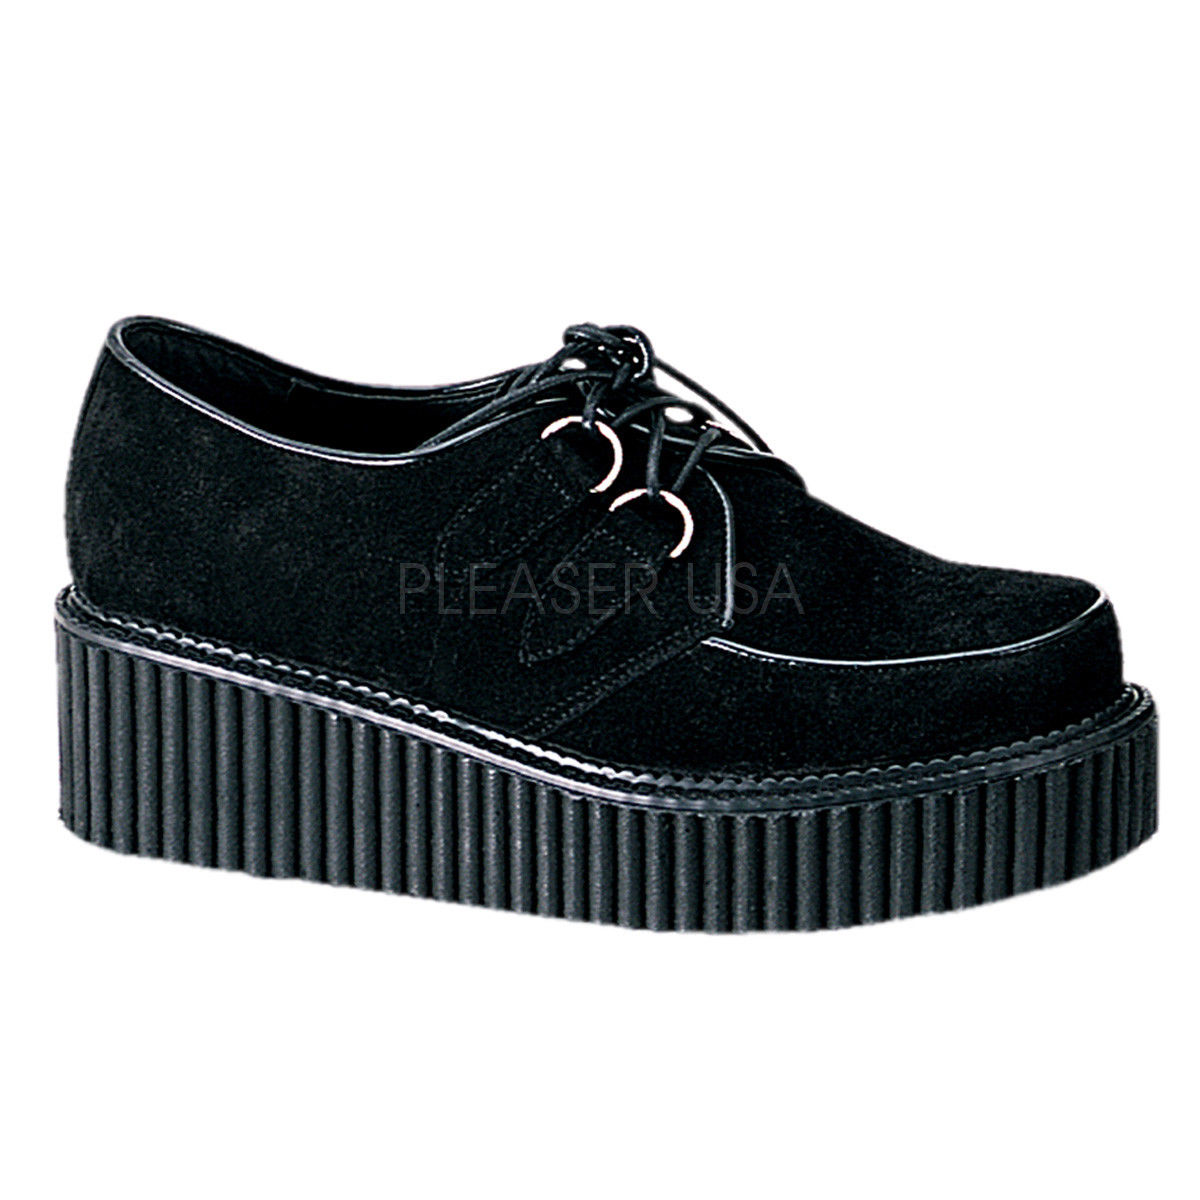 DEMONIA Creeper-101 Women's Black Suede Goth Punk Rockabilly 2" Platforms Shoes - A Shoe Addiction